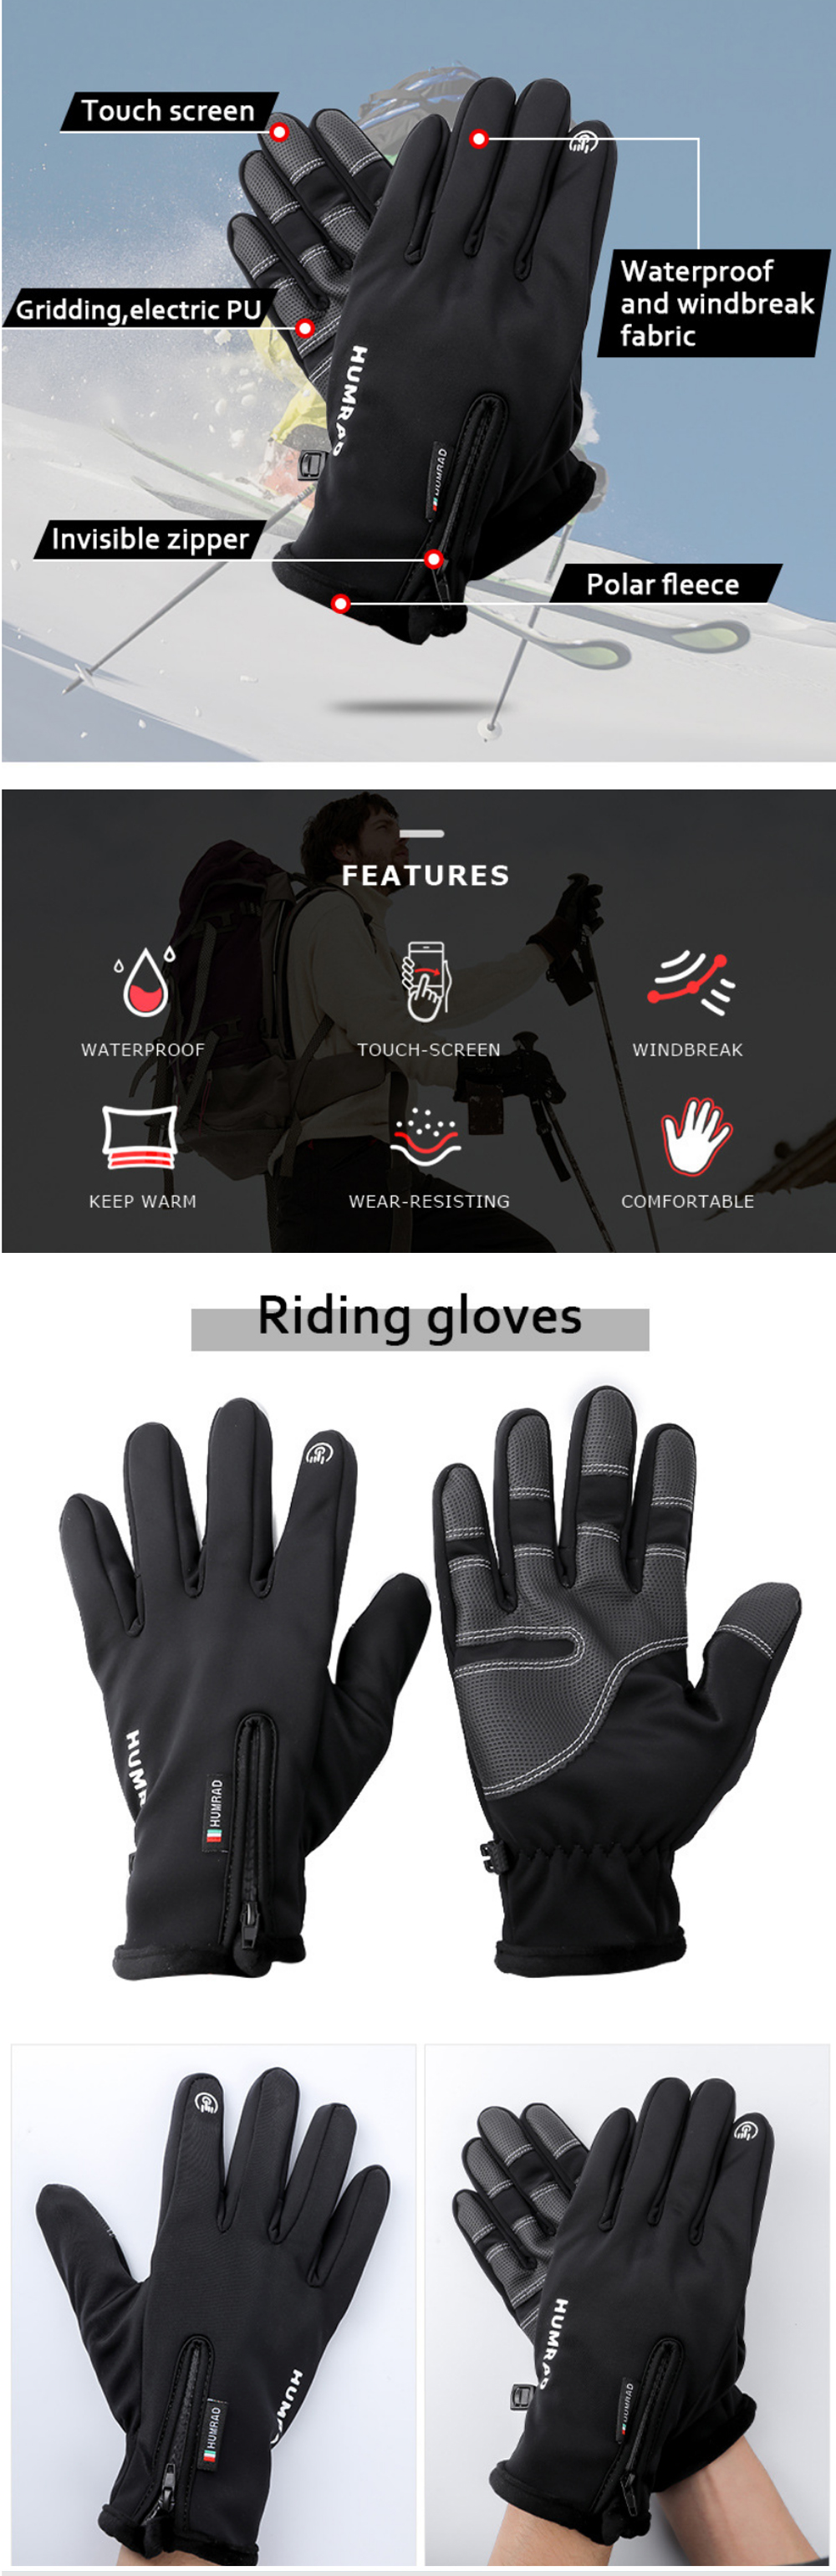 HUMRAD-Touch-Screen-Windbreak-Skiing-Gloves-MTB-Road-Bike-Warm-Up-Gloves-Mountain-Bike-Bicycle-Water-1752886-1